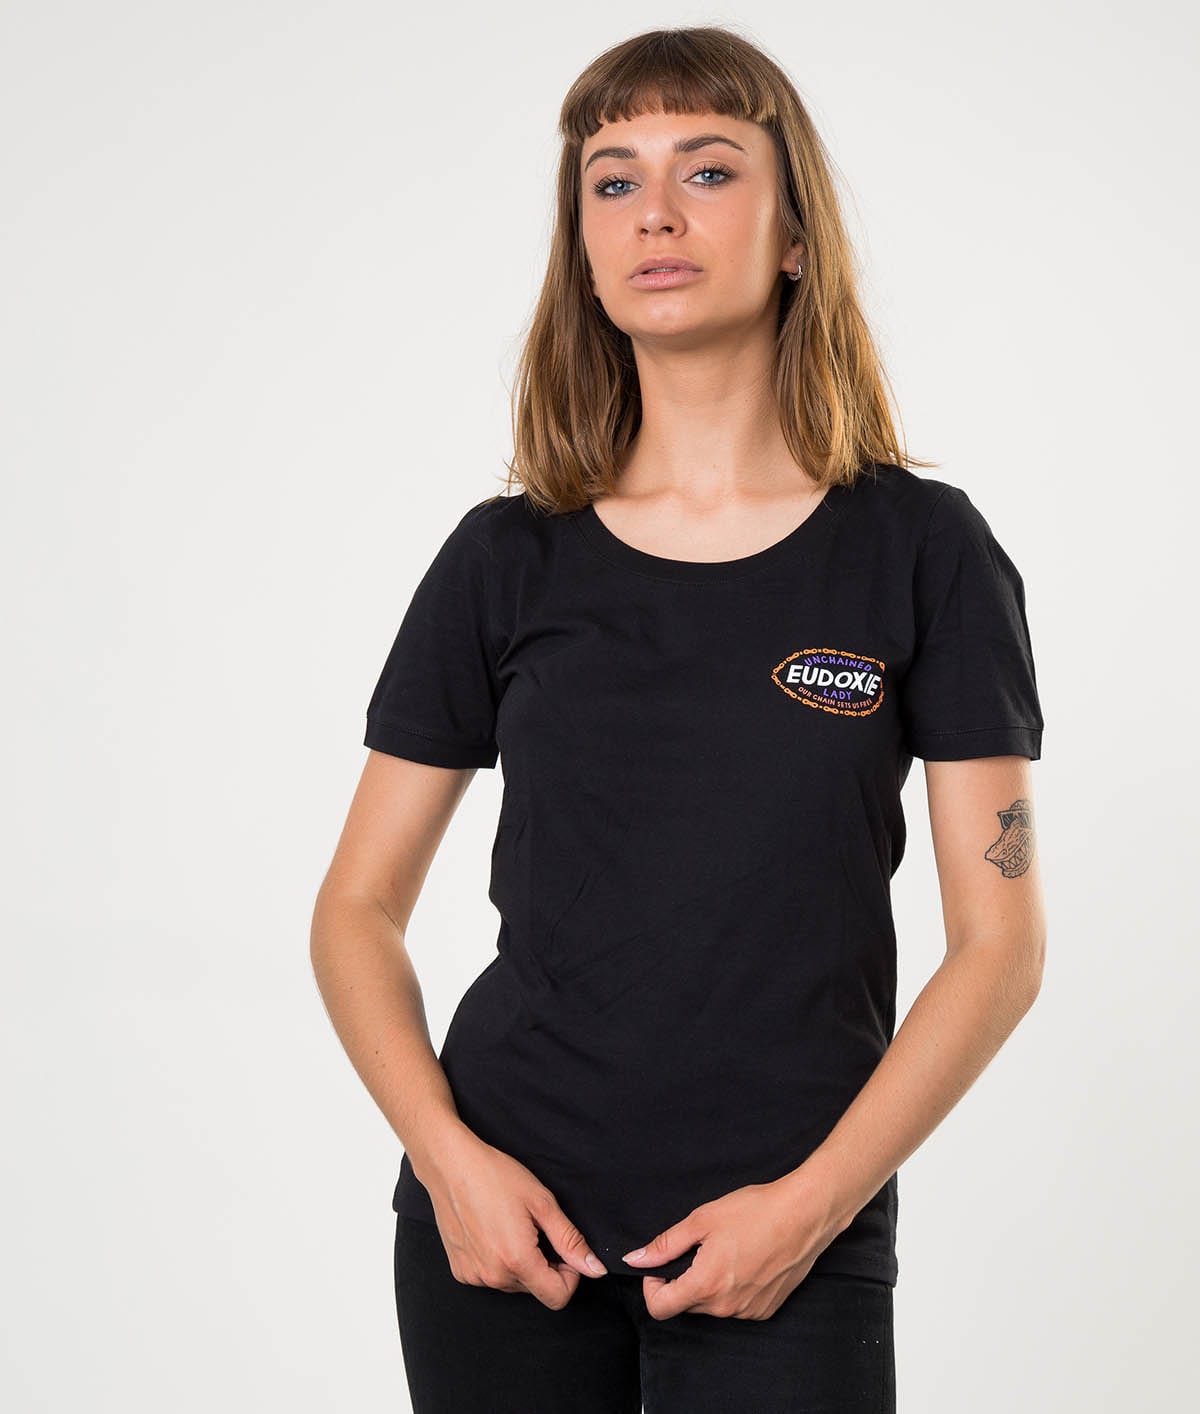 Eudoxie Black Masha T-Shirt - ExtraLarge - Bild 2